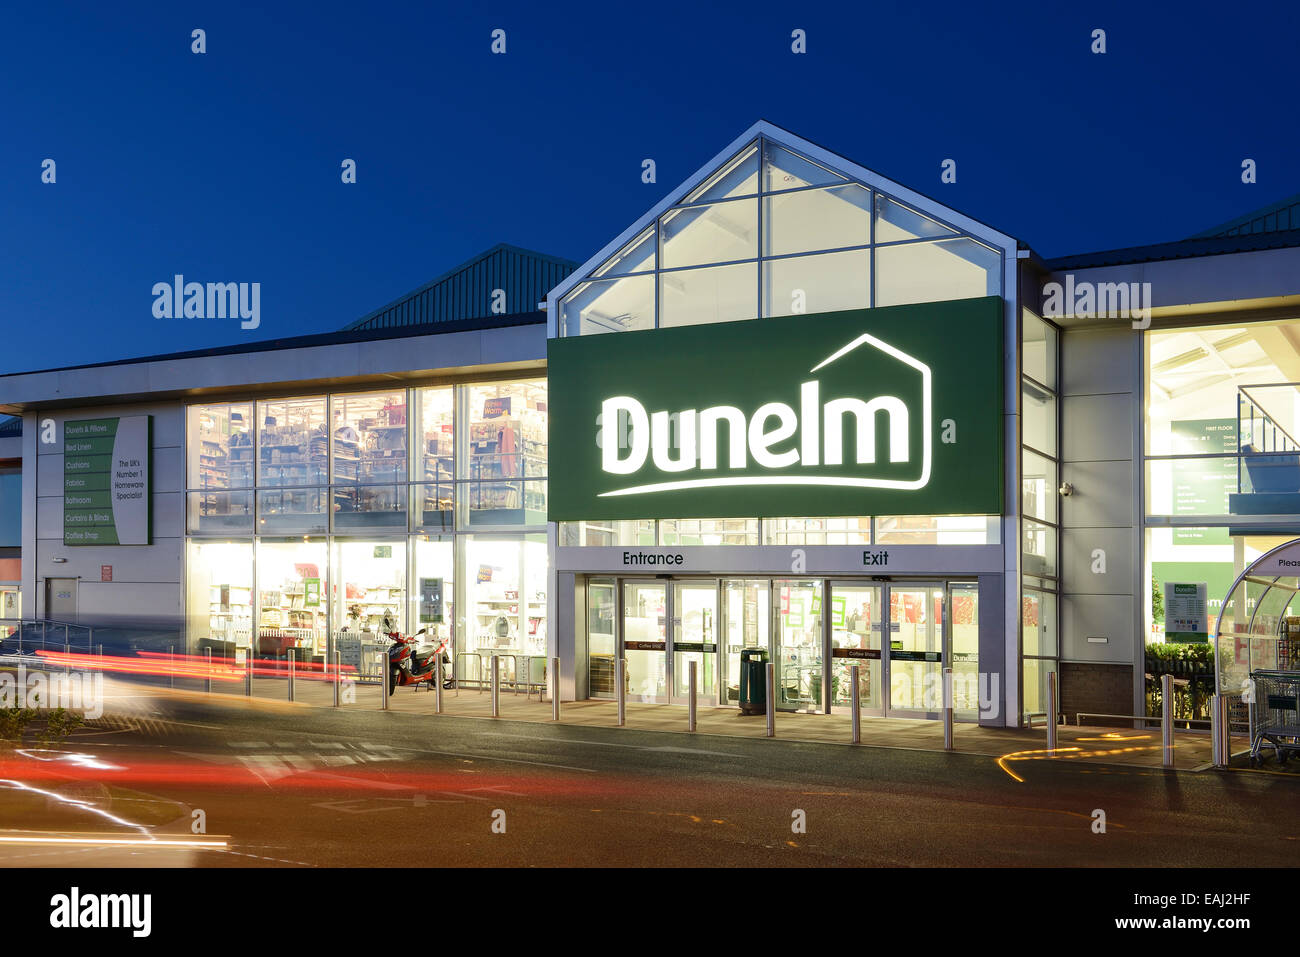 Dunelm store entrance at night Stock Photo